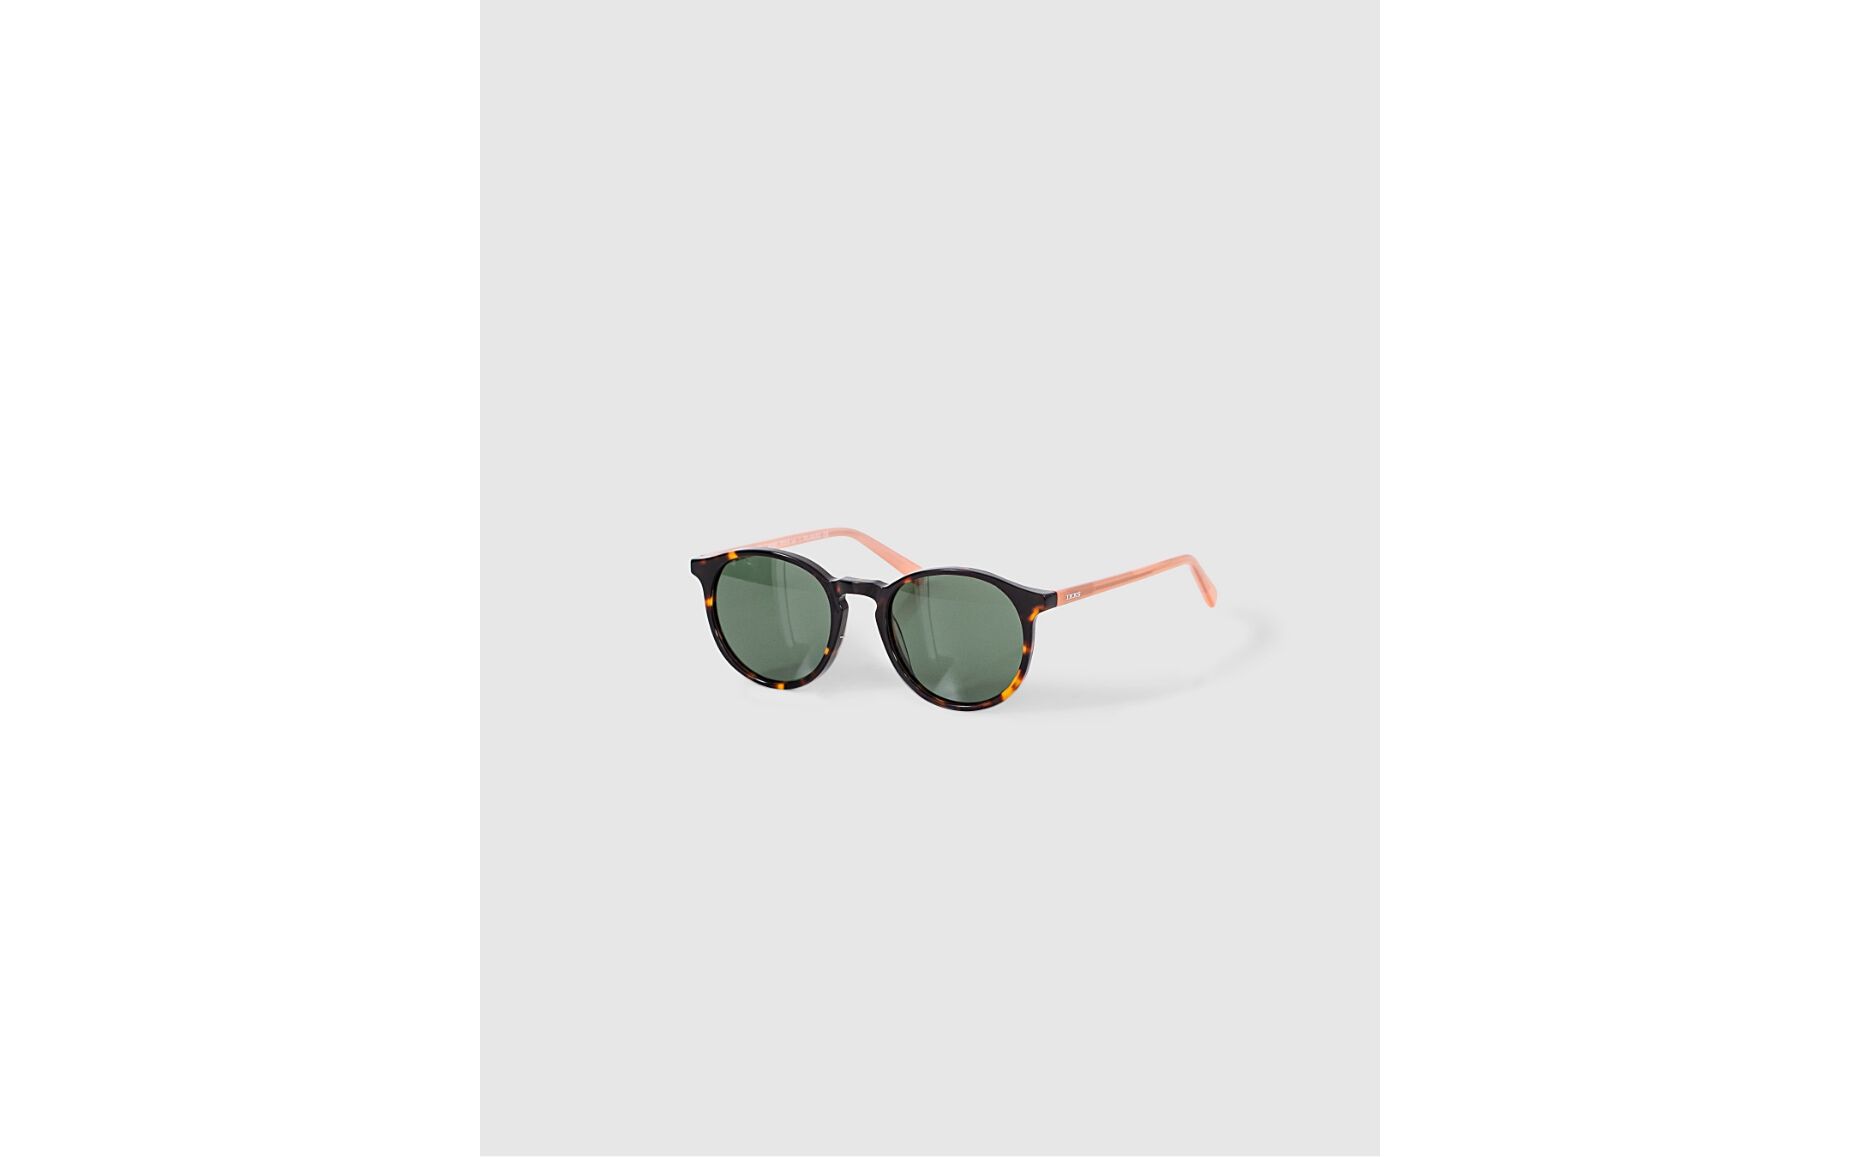 Apricot scaled composite sunglasses